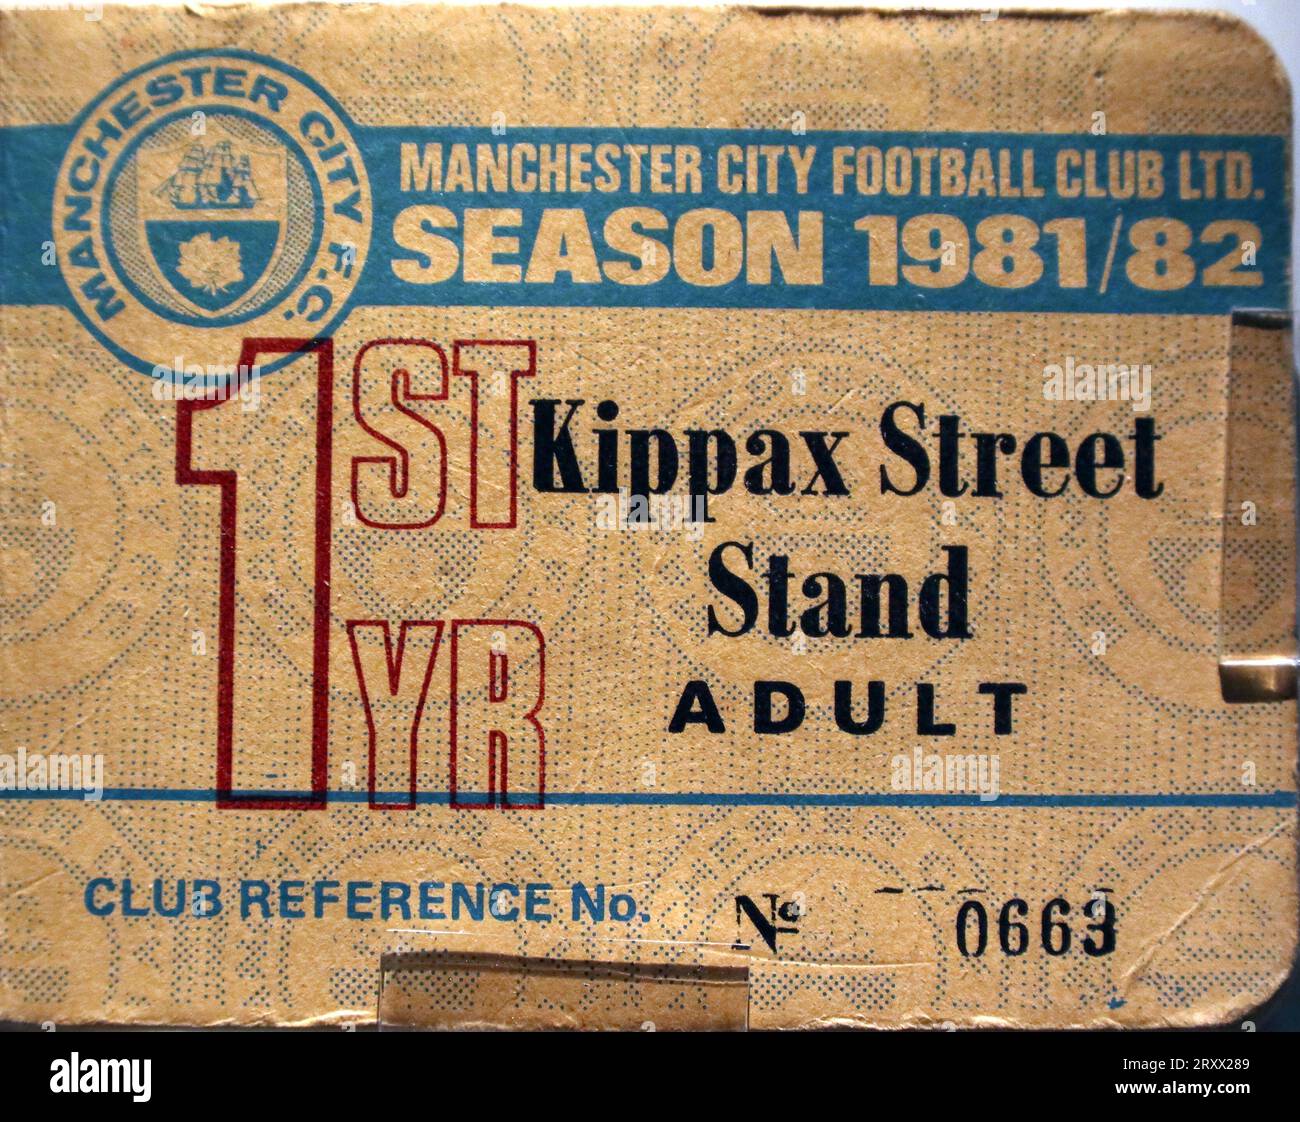 Season Ticket saison 1981/82, Manchester City football Club - Kippax St - Maine Road Banque D'Images